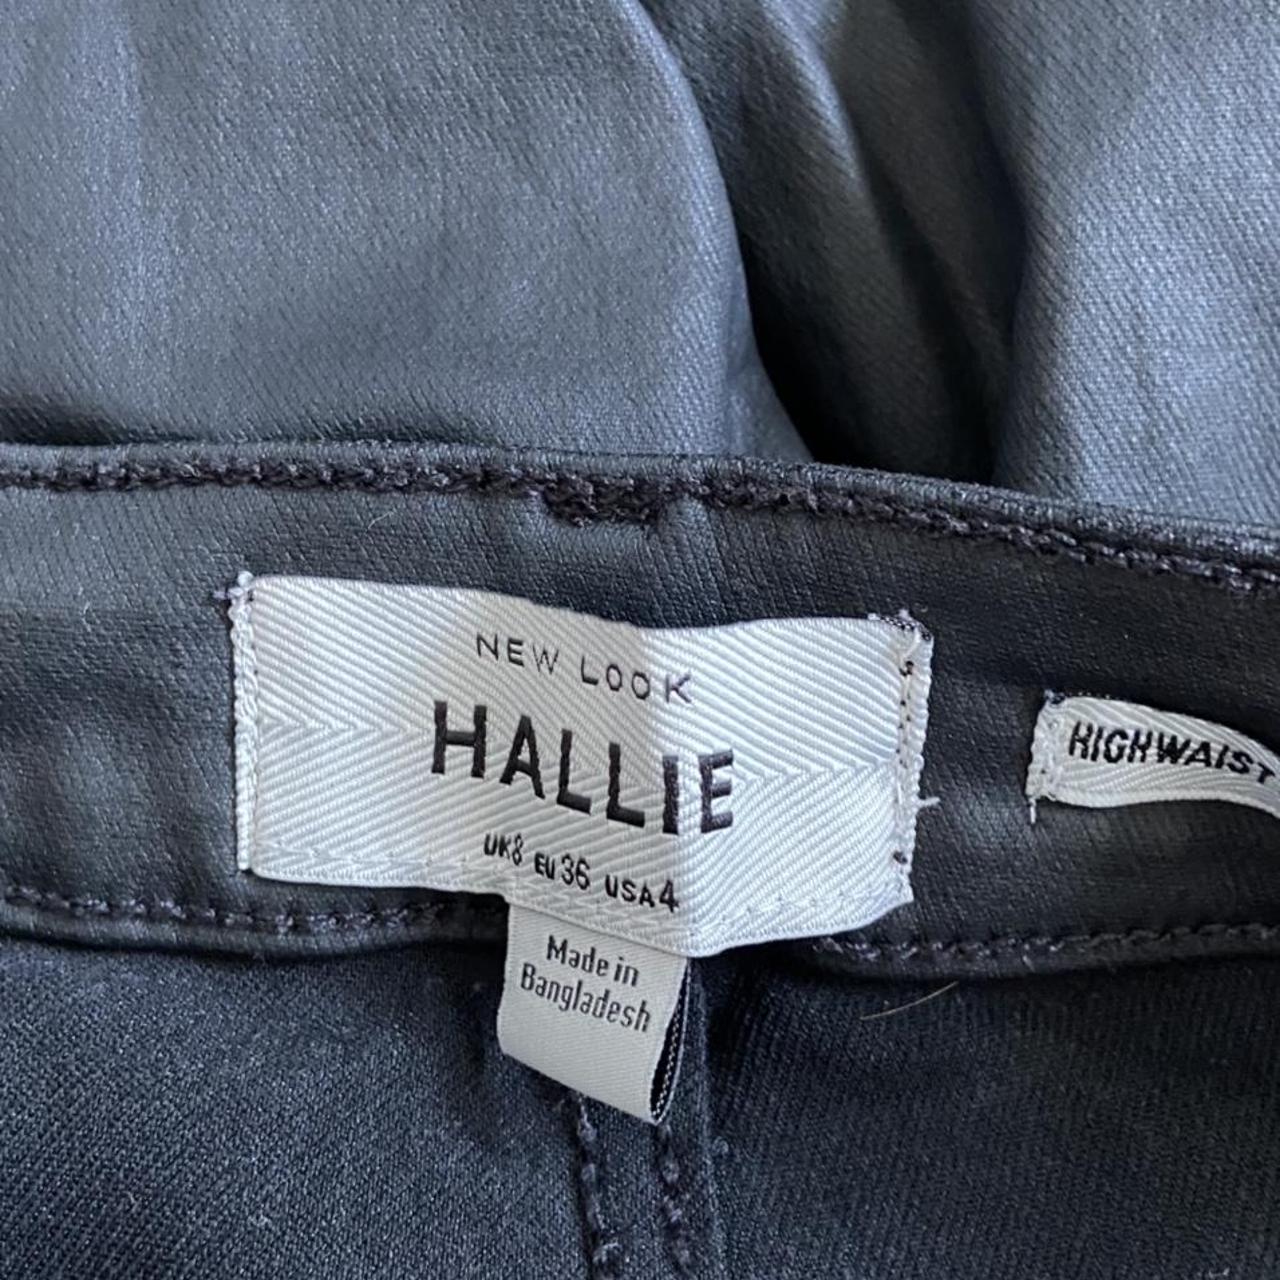 New look Hallie black leather look jeans• size 8 •... - Depop